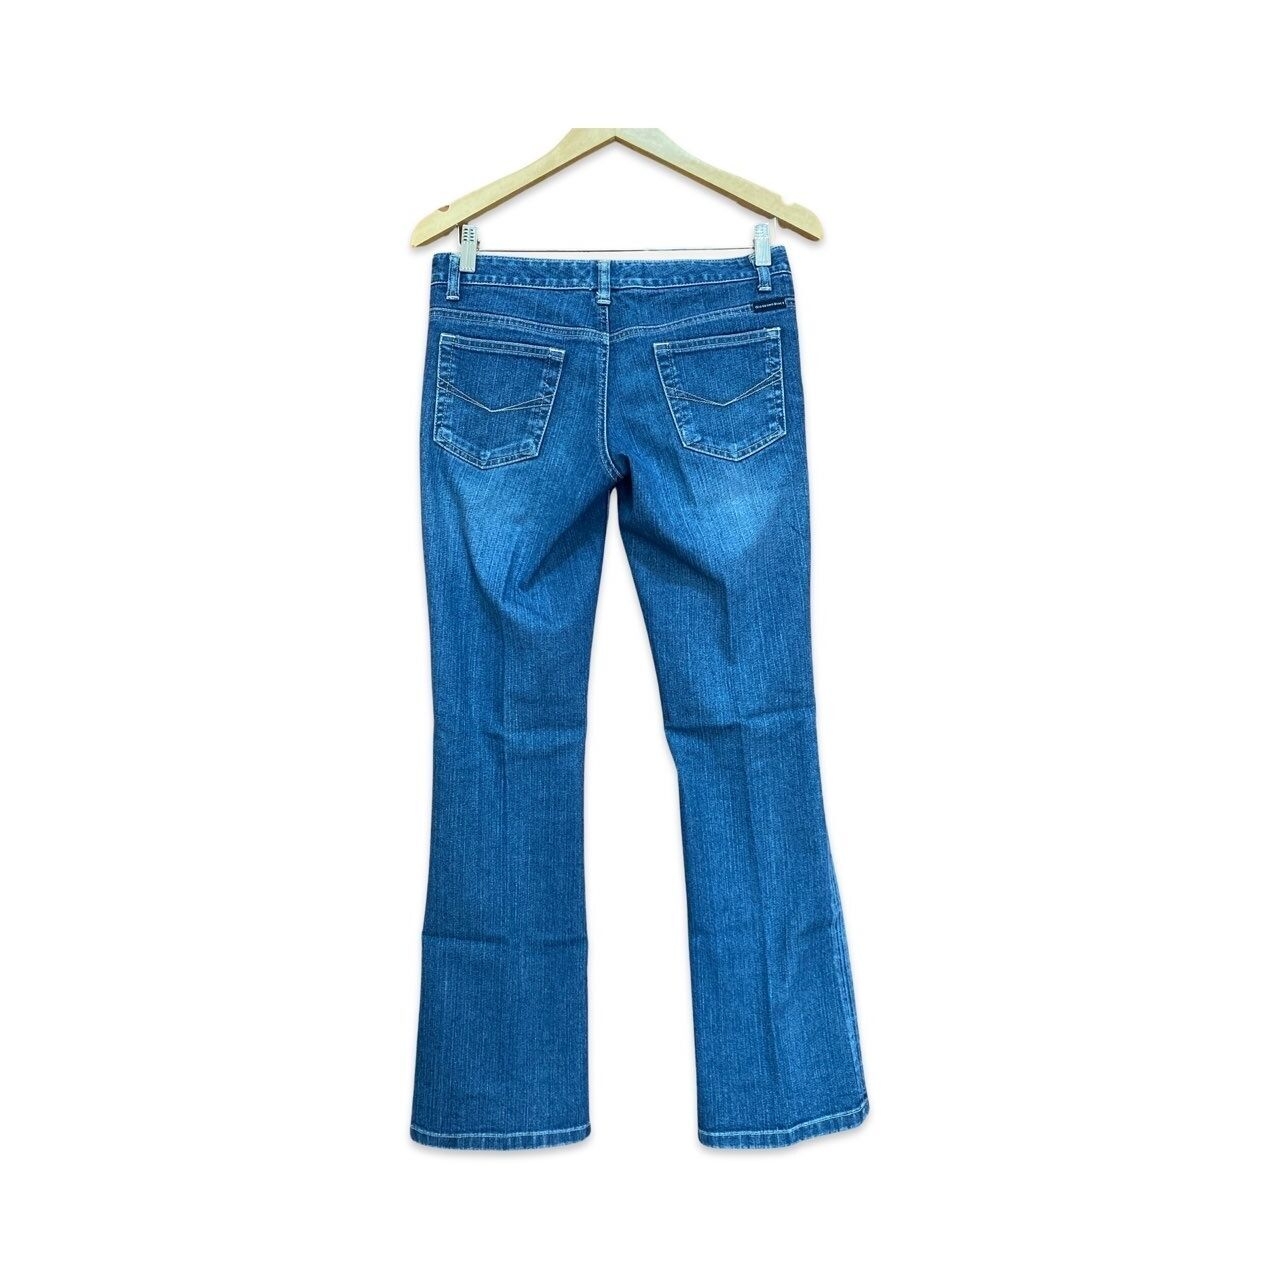 Giordano Blue Jeans Long Pants